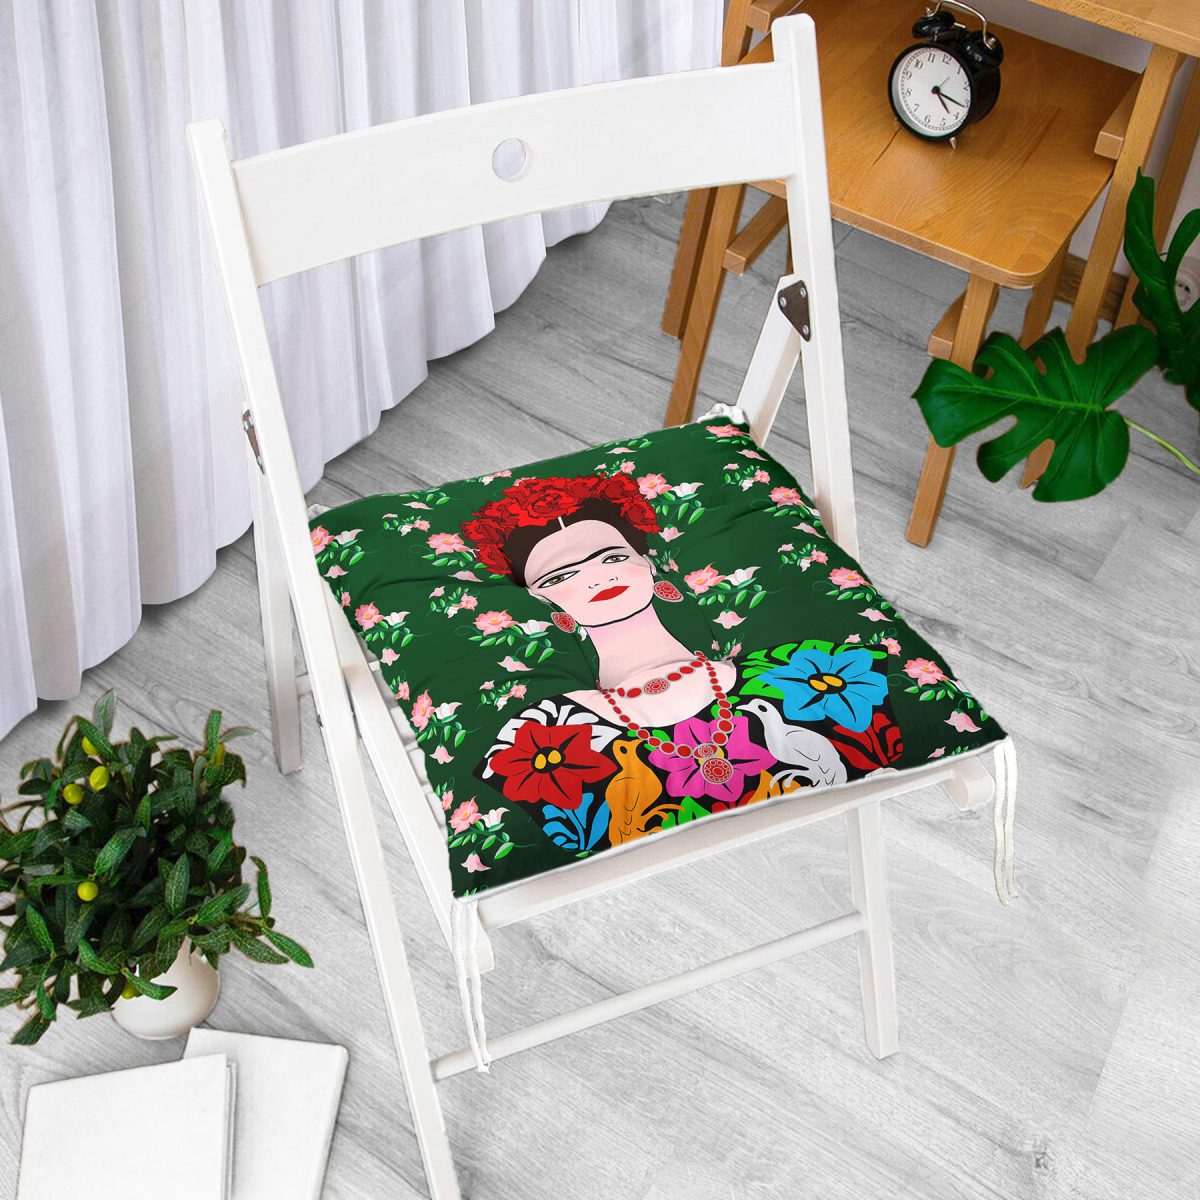 Yeşil Zeminde Frida Kahlo Motifli Özel Tasarım Pofuduk Sandalye Minderi Realhomes